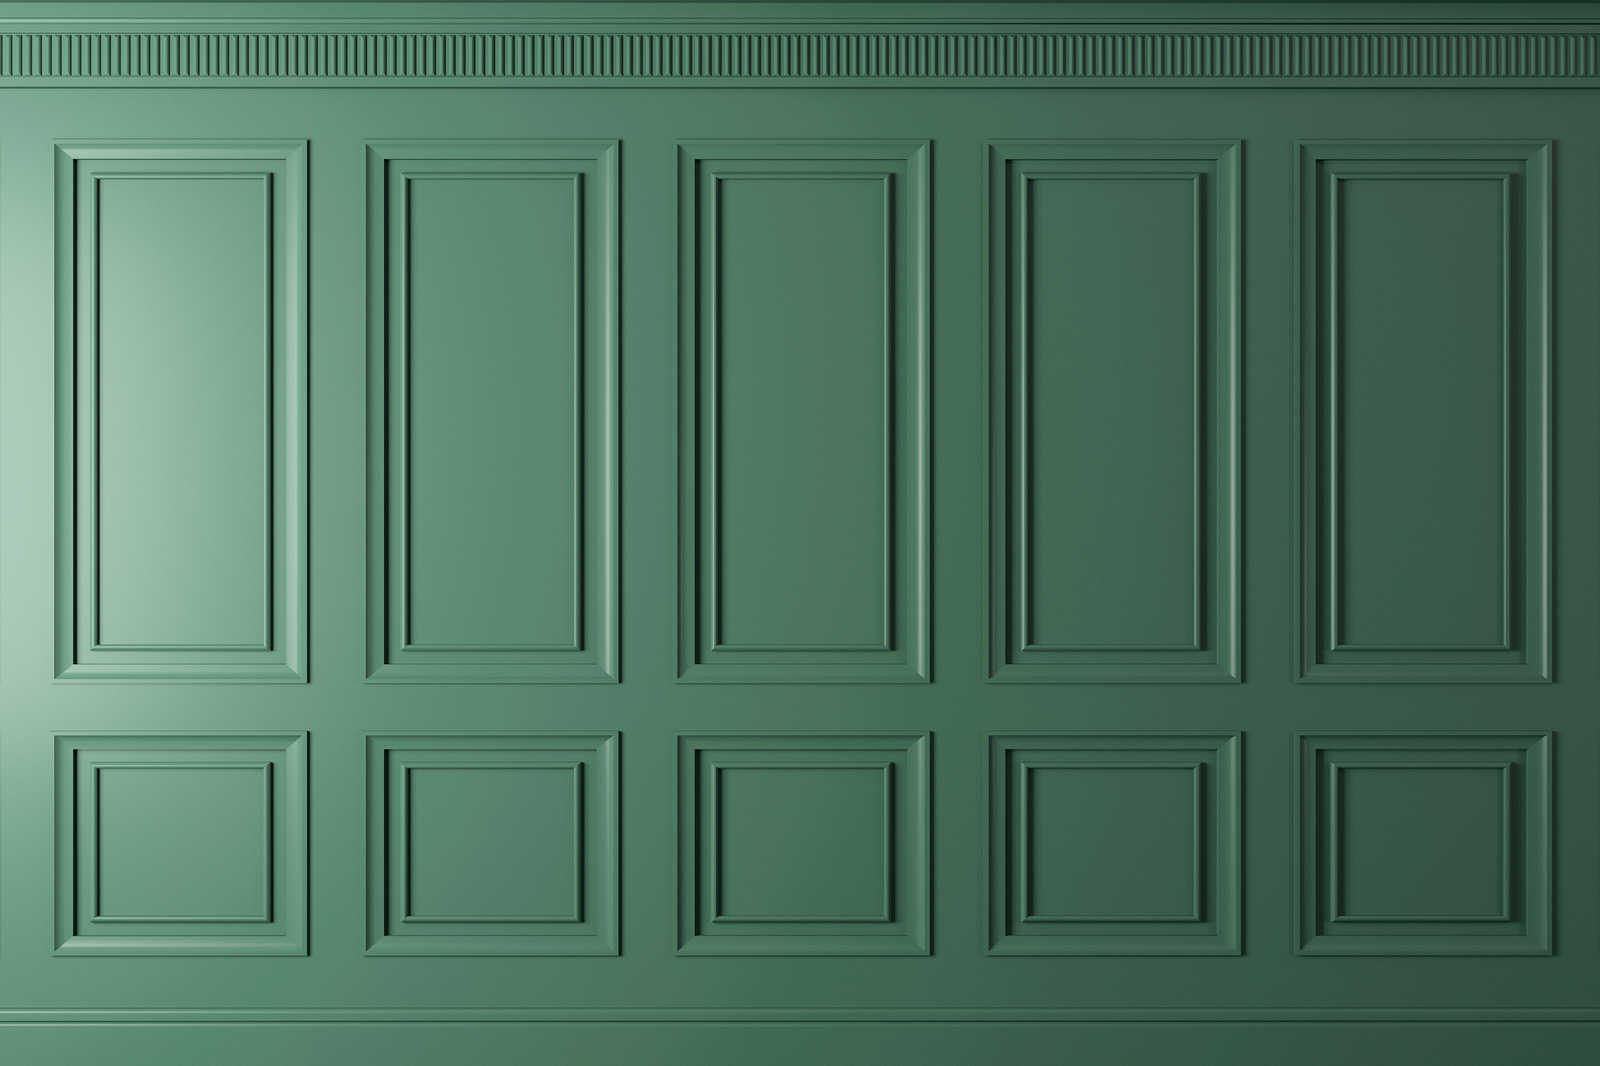             Kensington 1 - Pintura en lienzo 3D revestimiento madera abeto verde - 1,20 m x 0,80 m
        